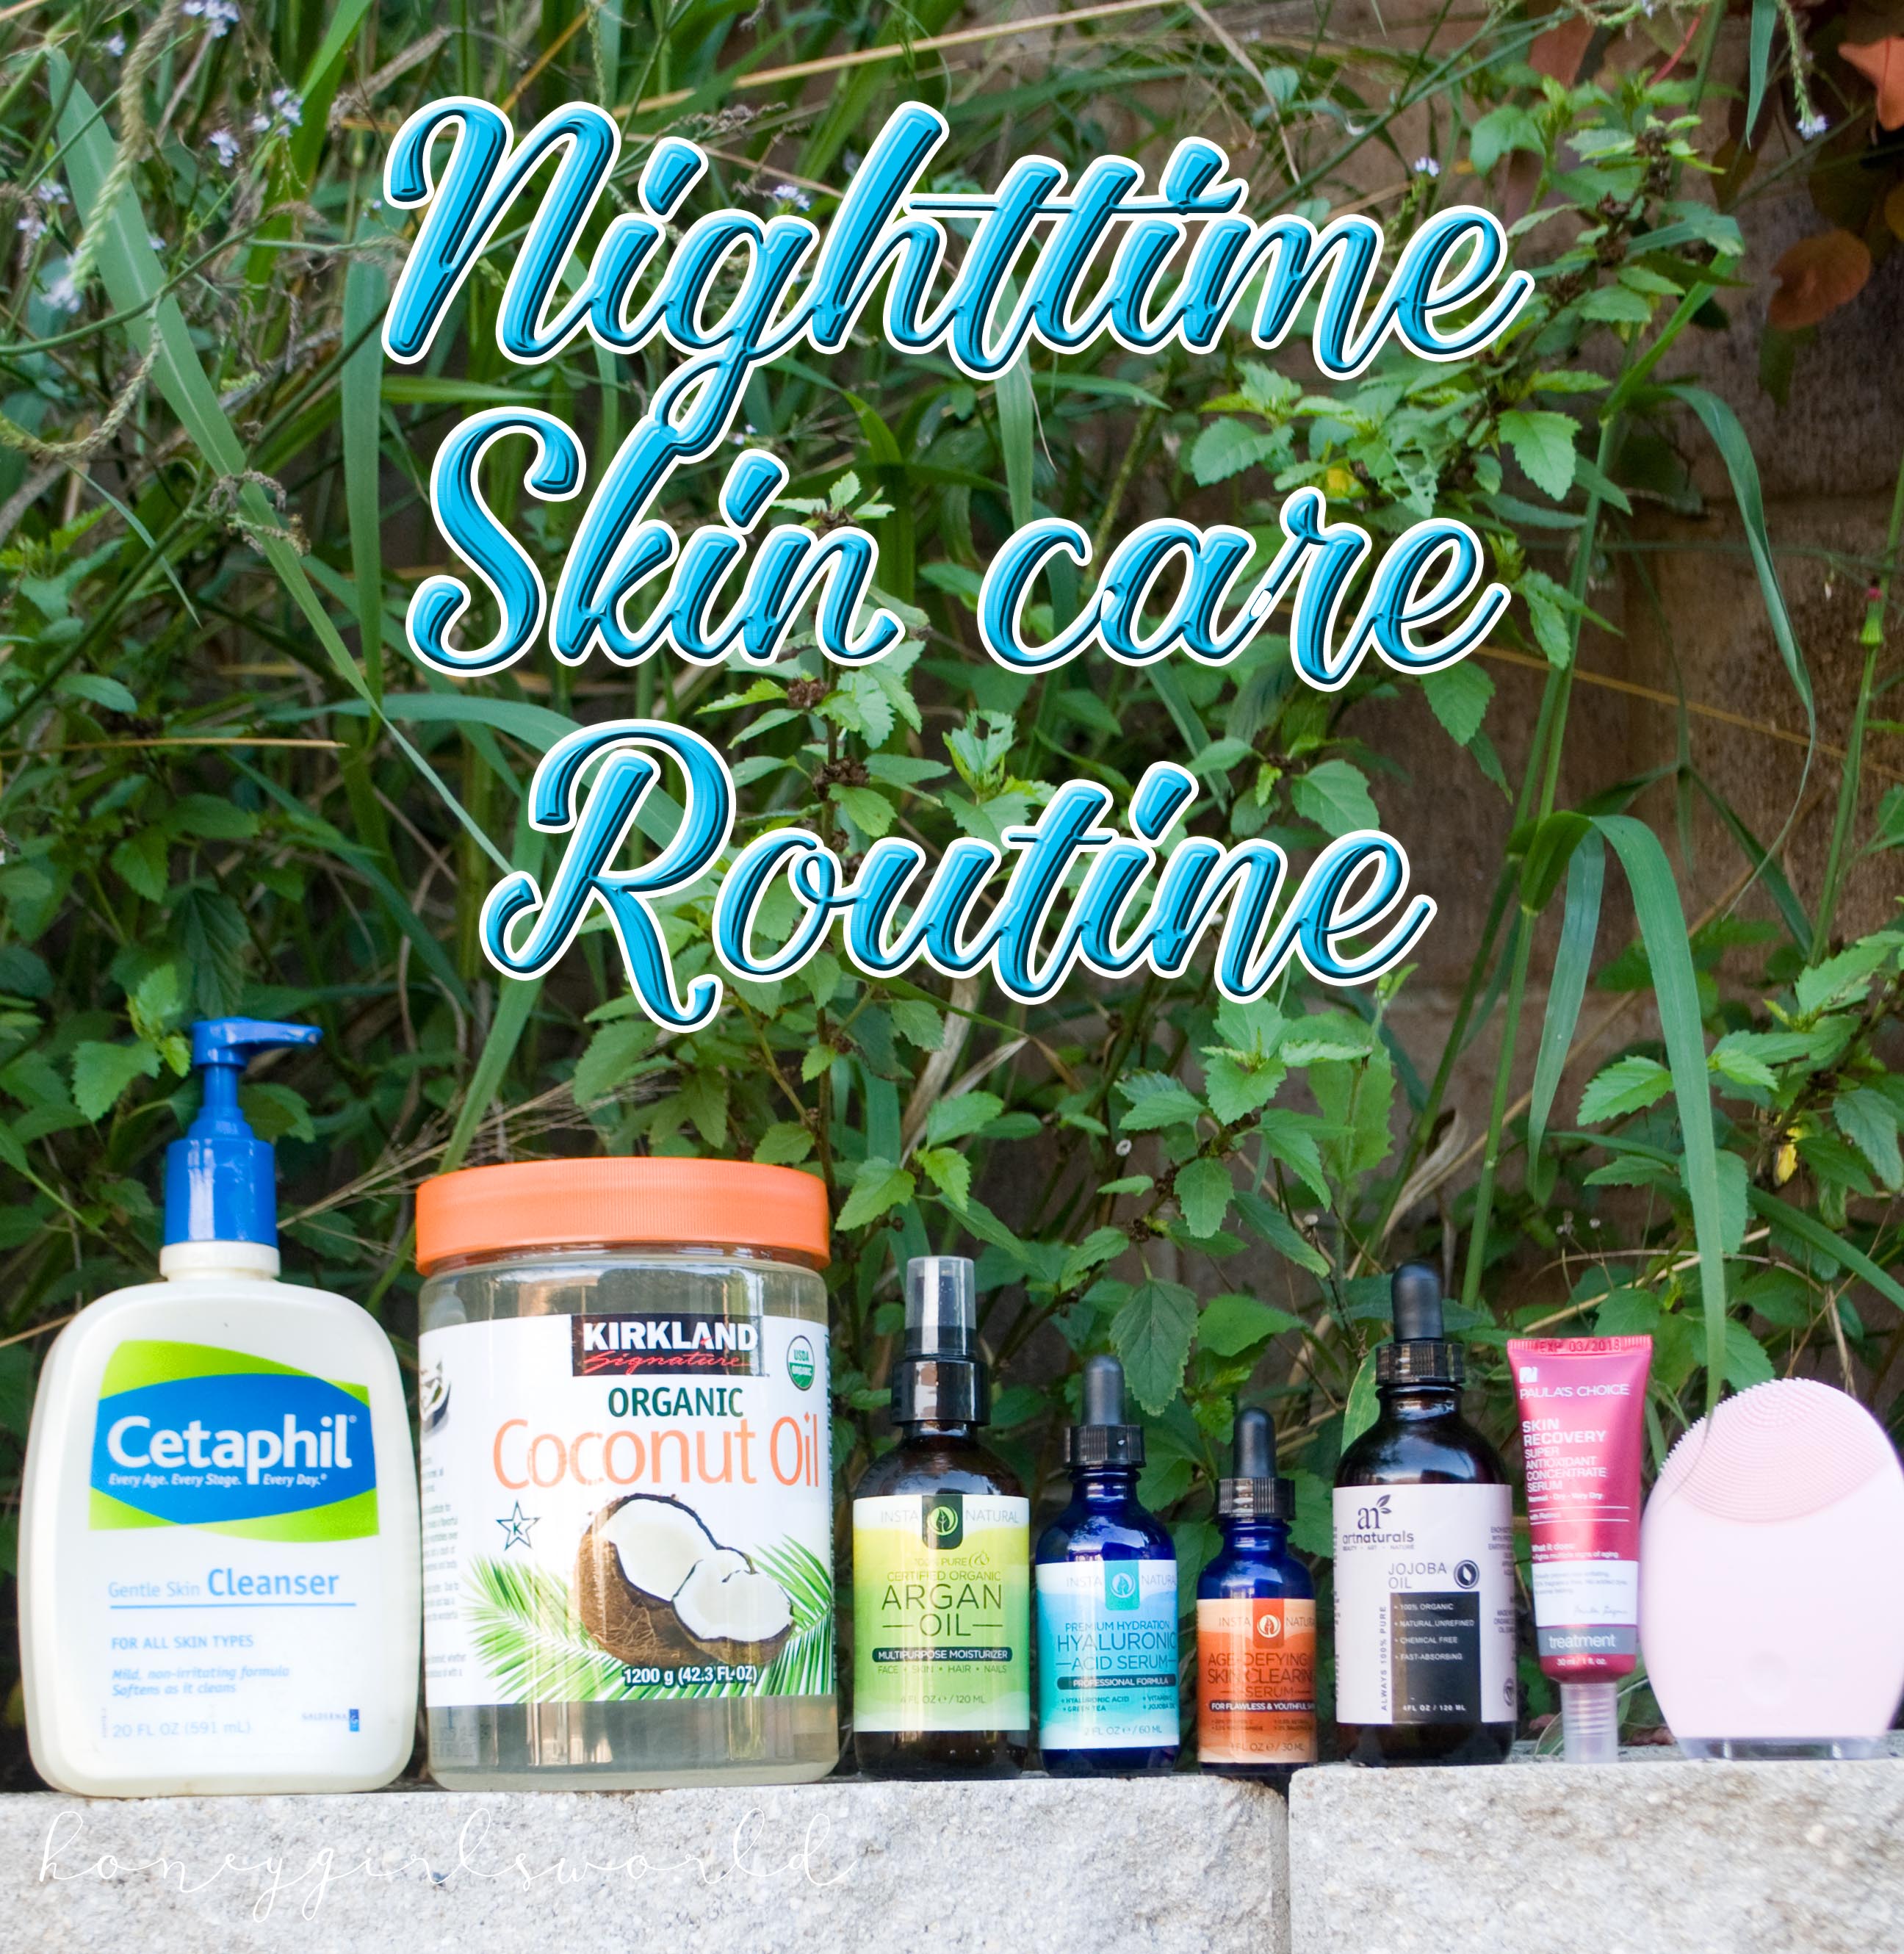 My Nighttime Skincare Routine - Video Demo